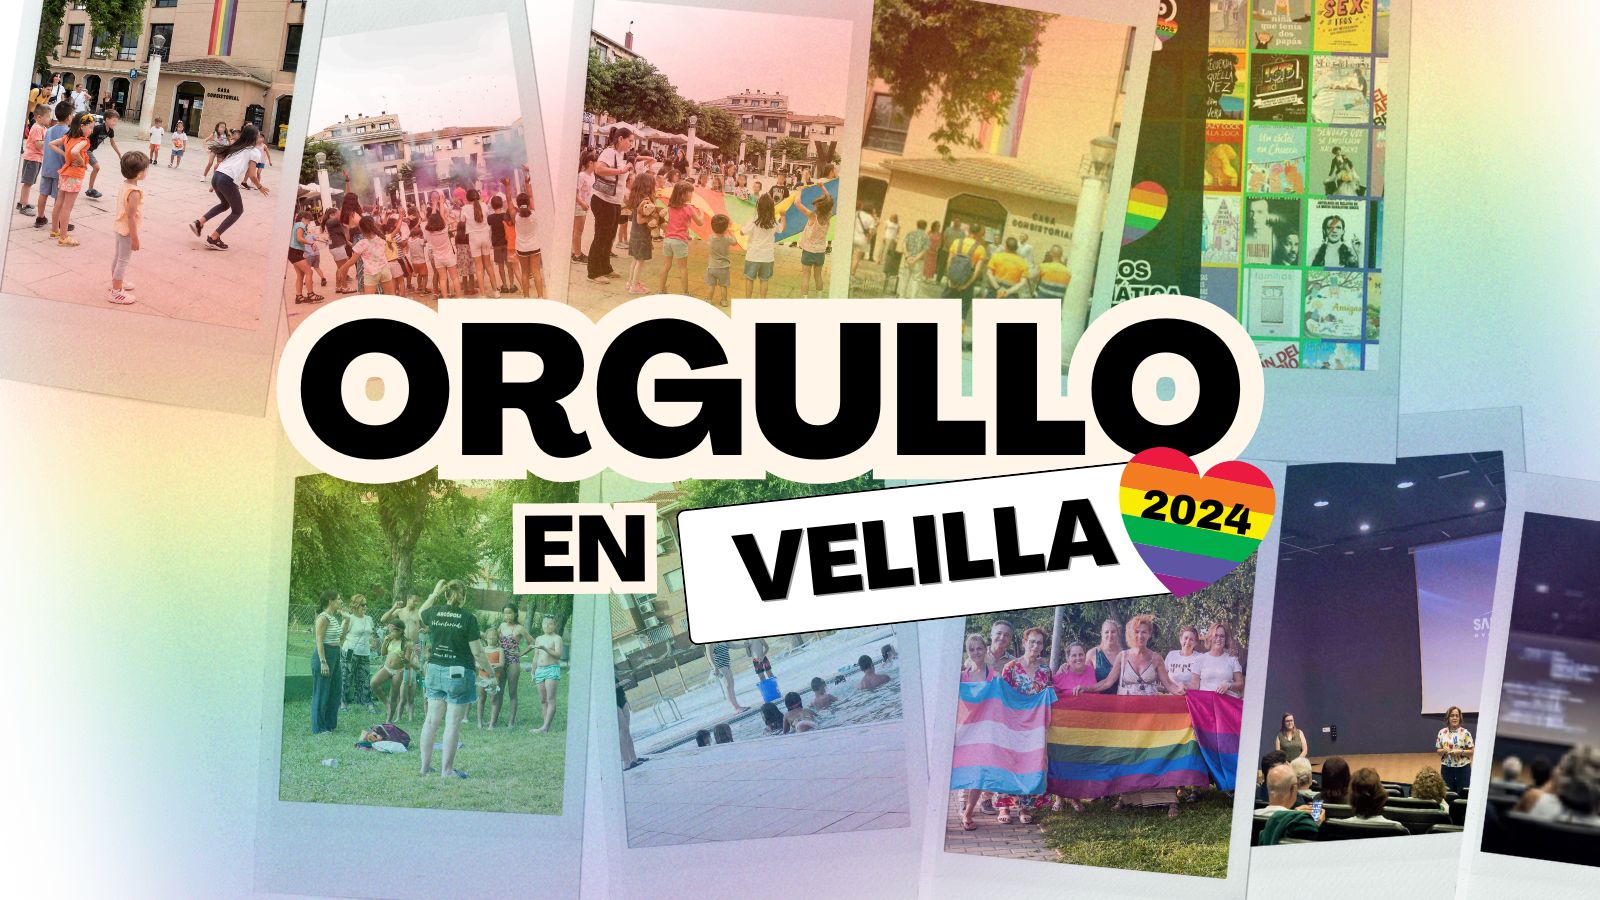 Velilla ORGULLOsa, un programa de actividades para la diversidad